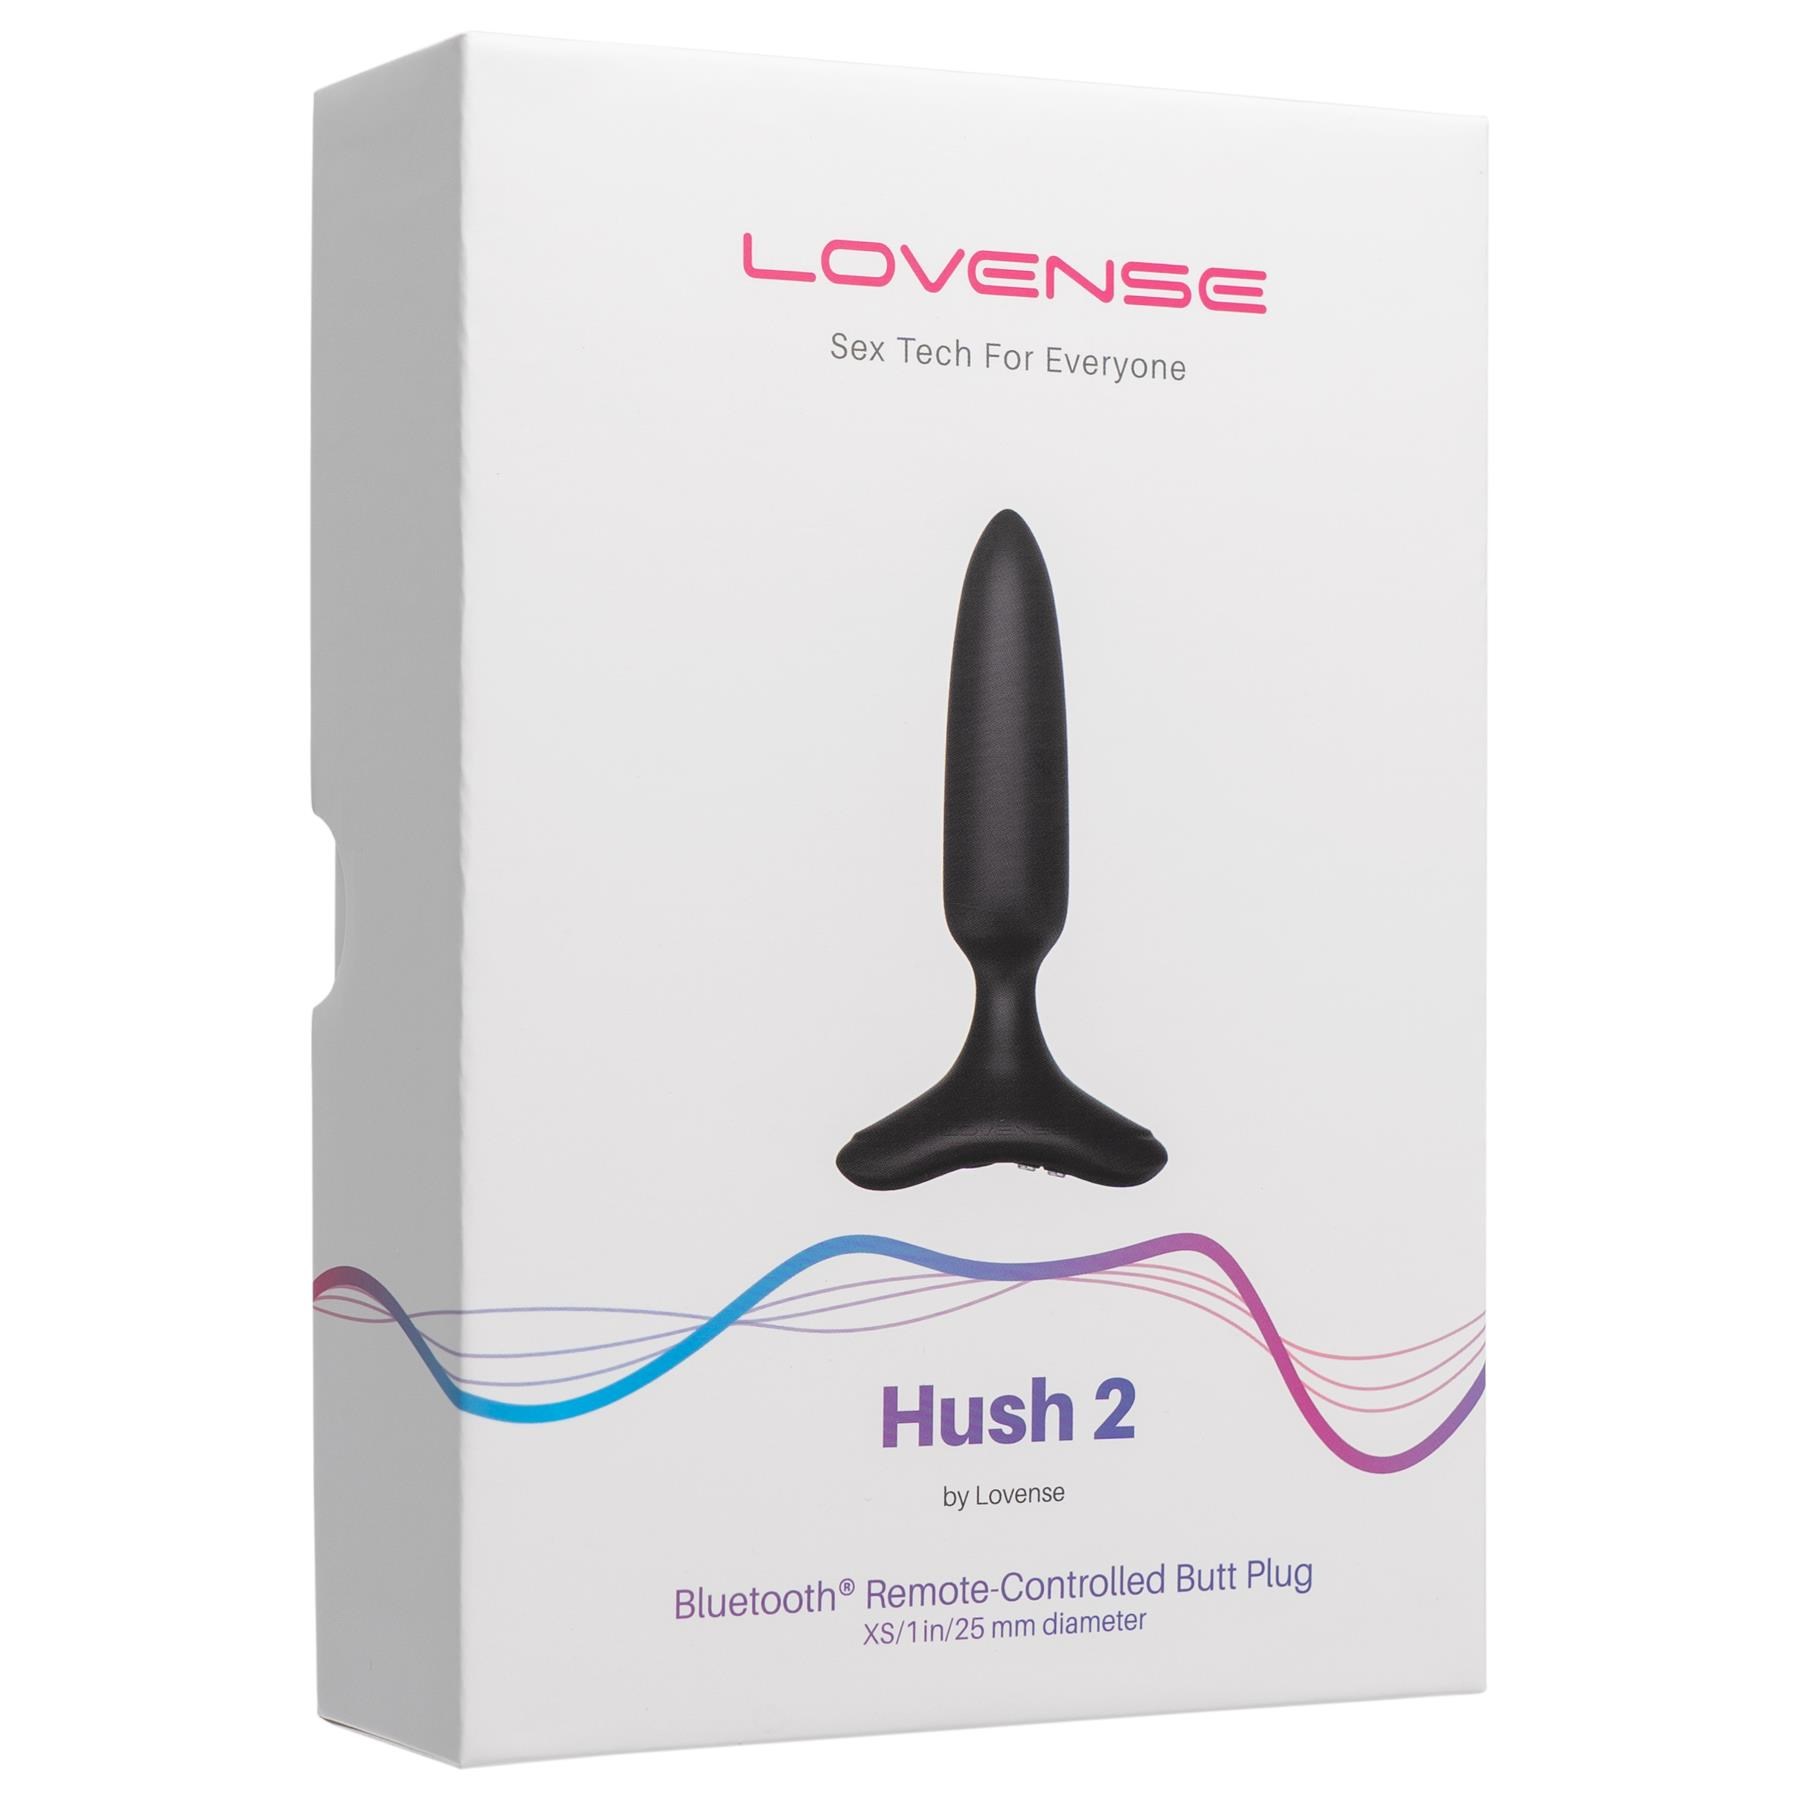 Lovense Hush 2 Bluetooth Vibrating Butt Plug - X-Small - Packaging